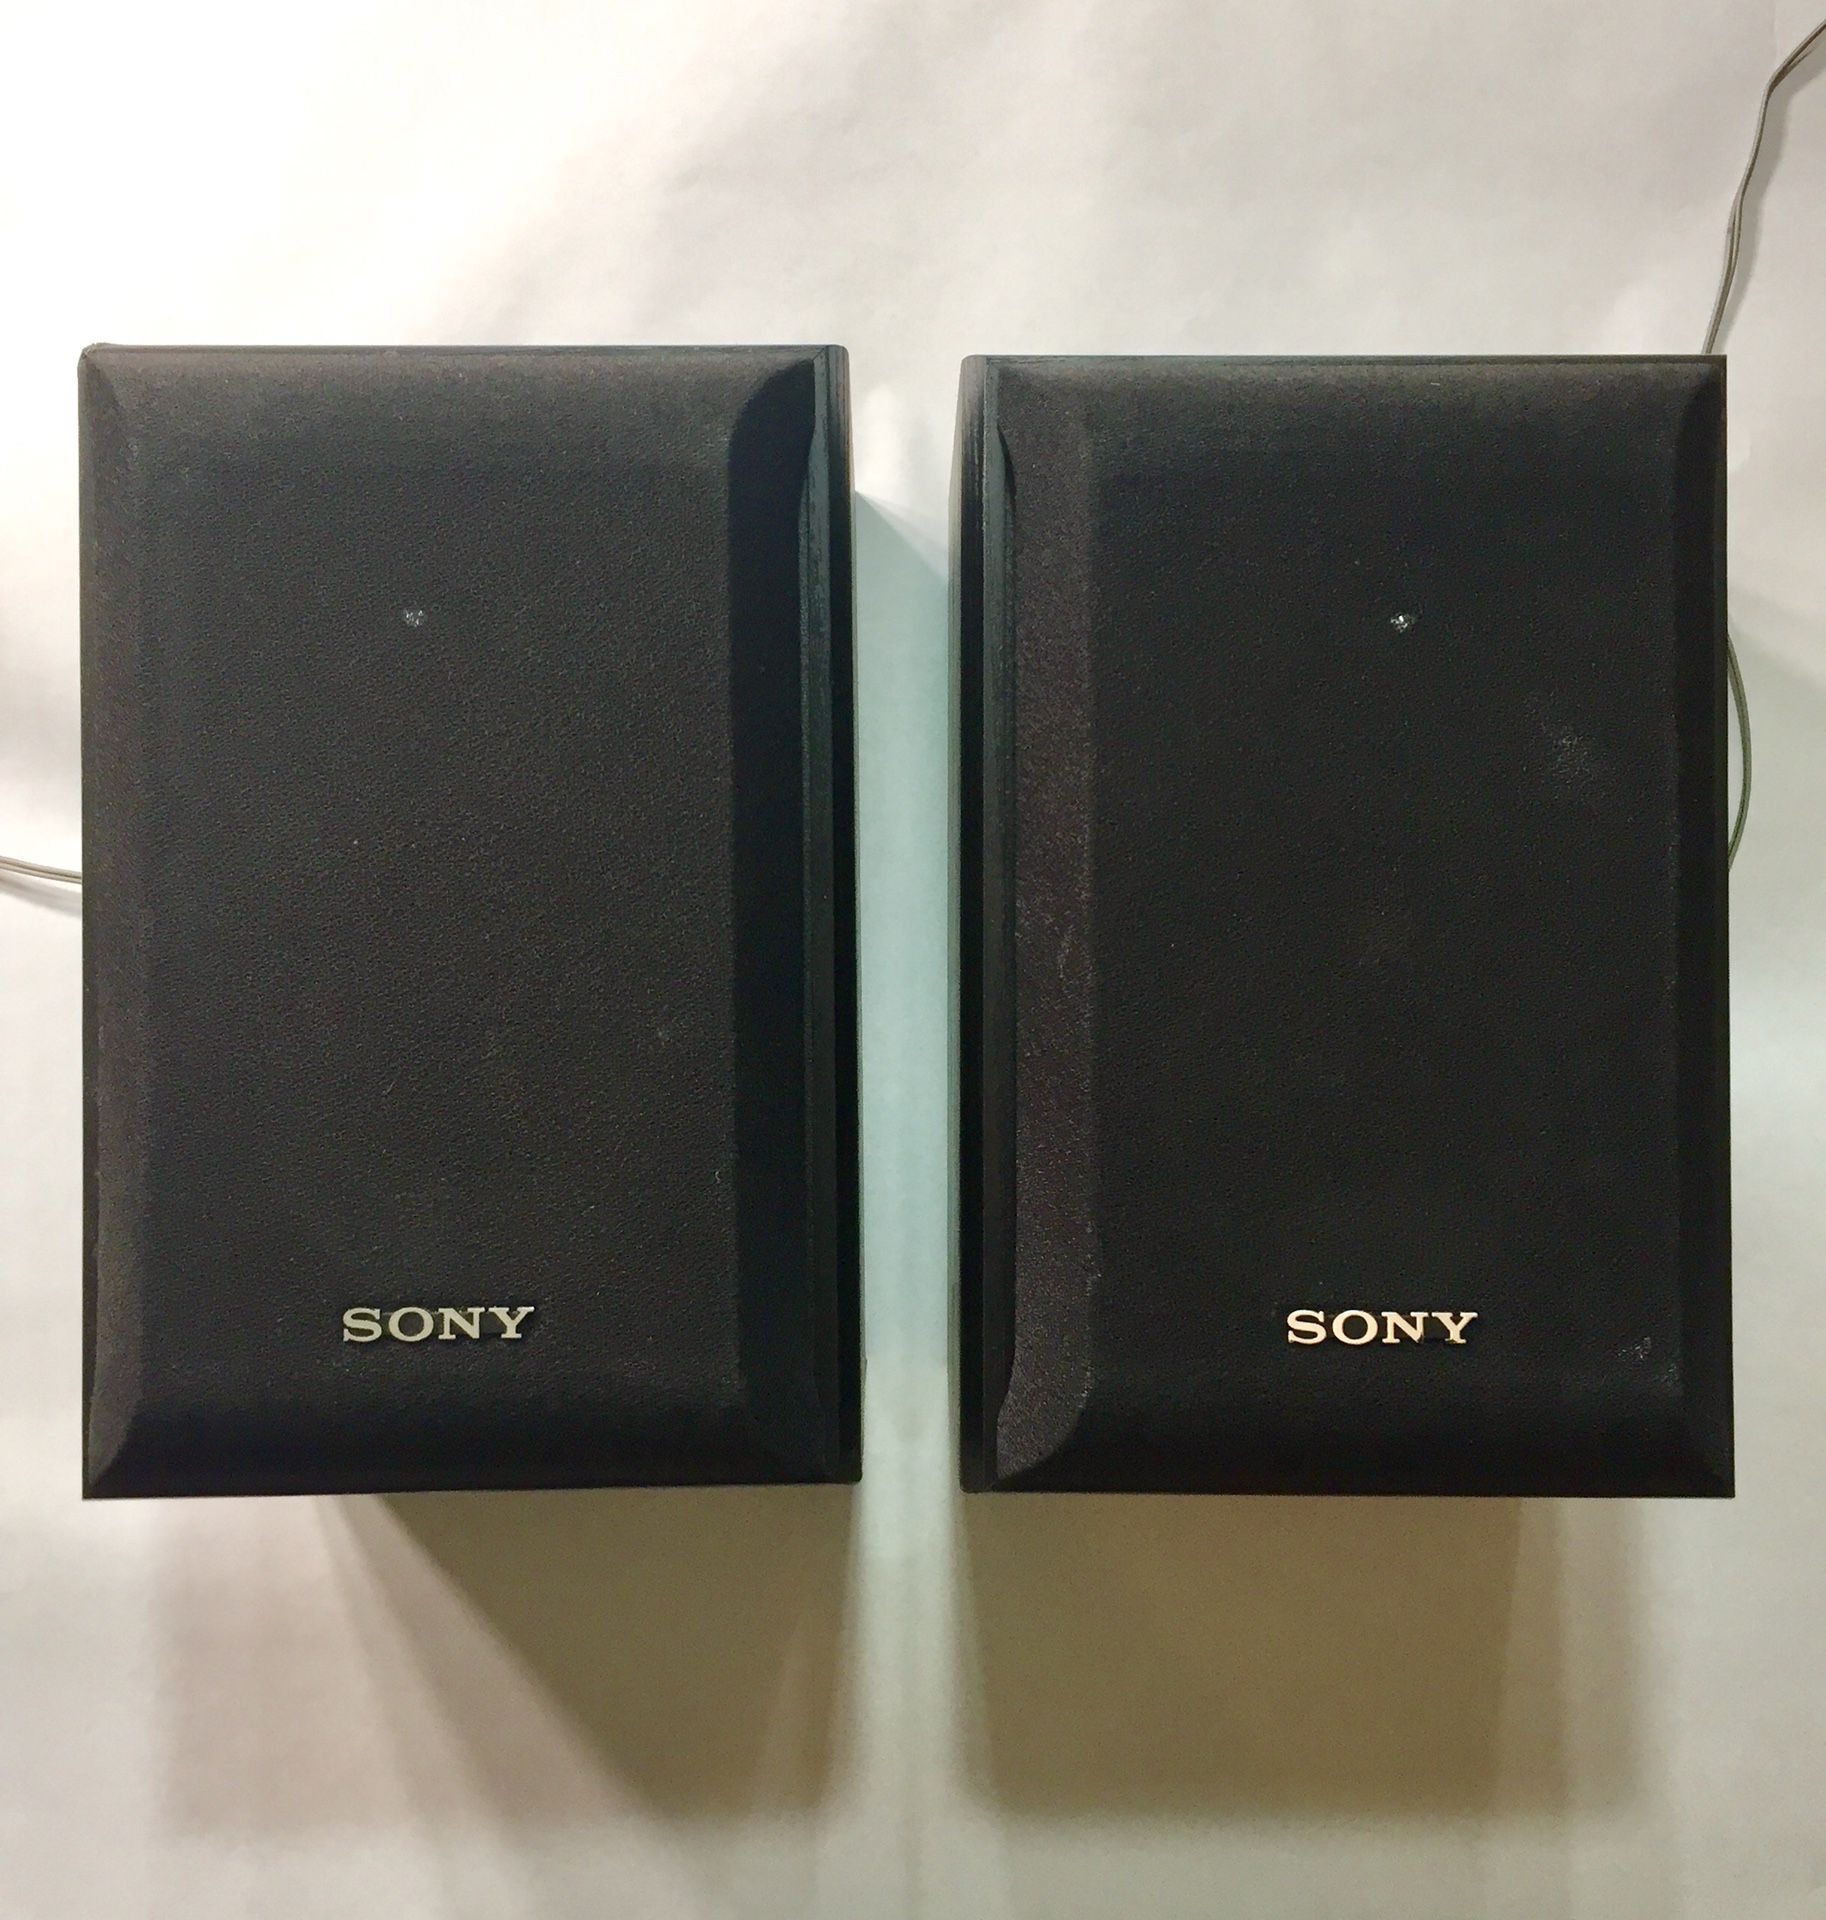 Sony SS-B1000 bookshelf speakers